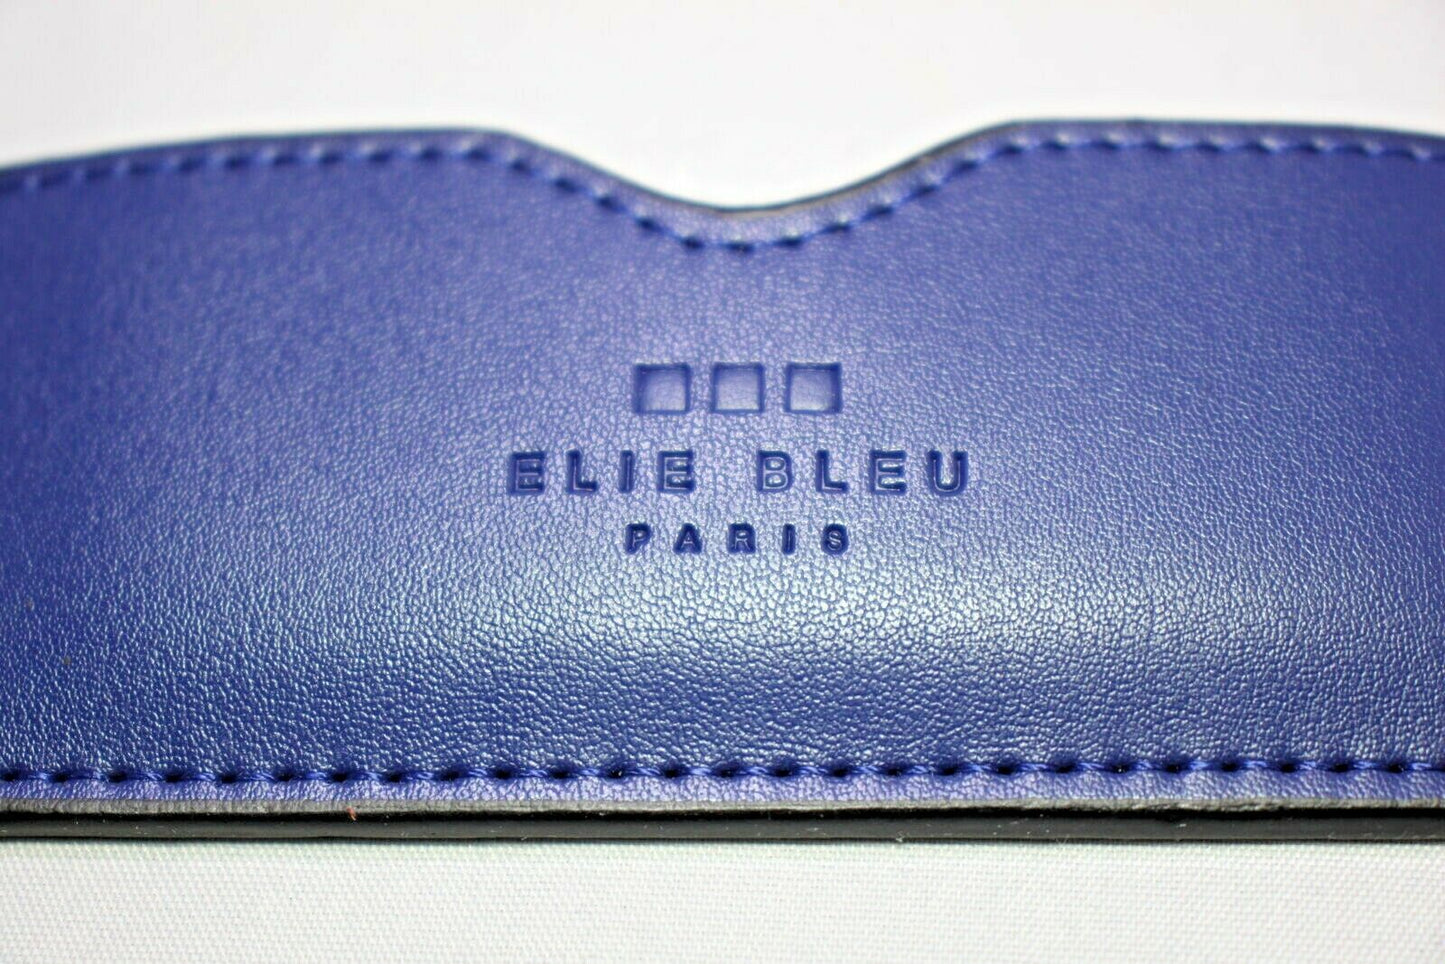 Elie Bleu Leather Cigar Cutter Pouch For Elie Bleu EBC Series, EBPOUCH05